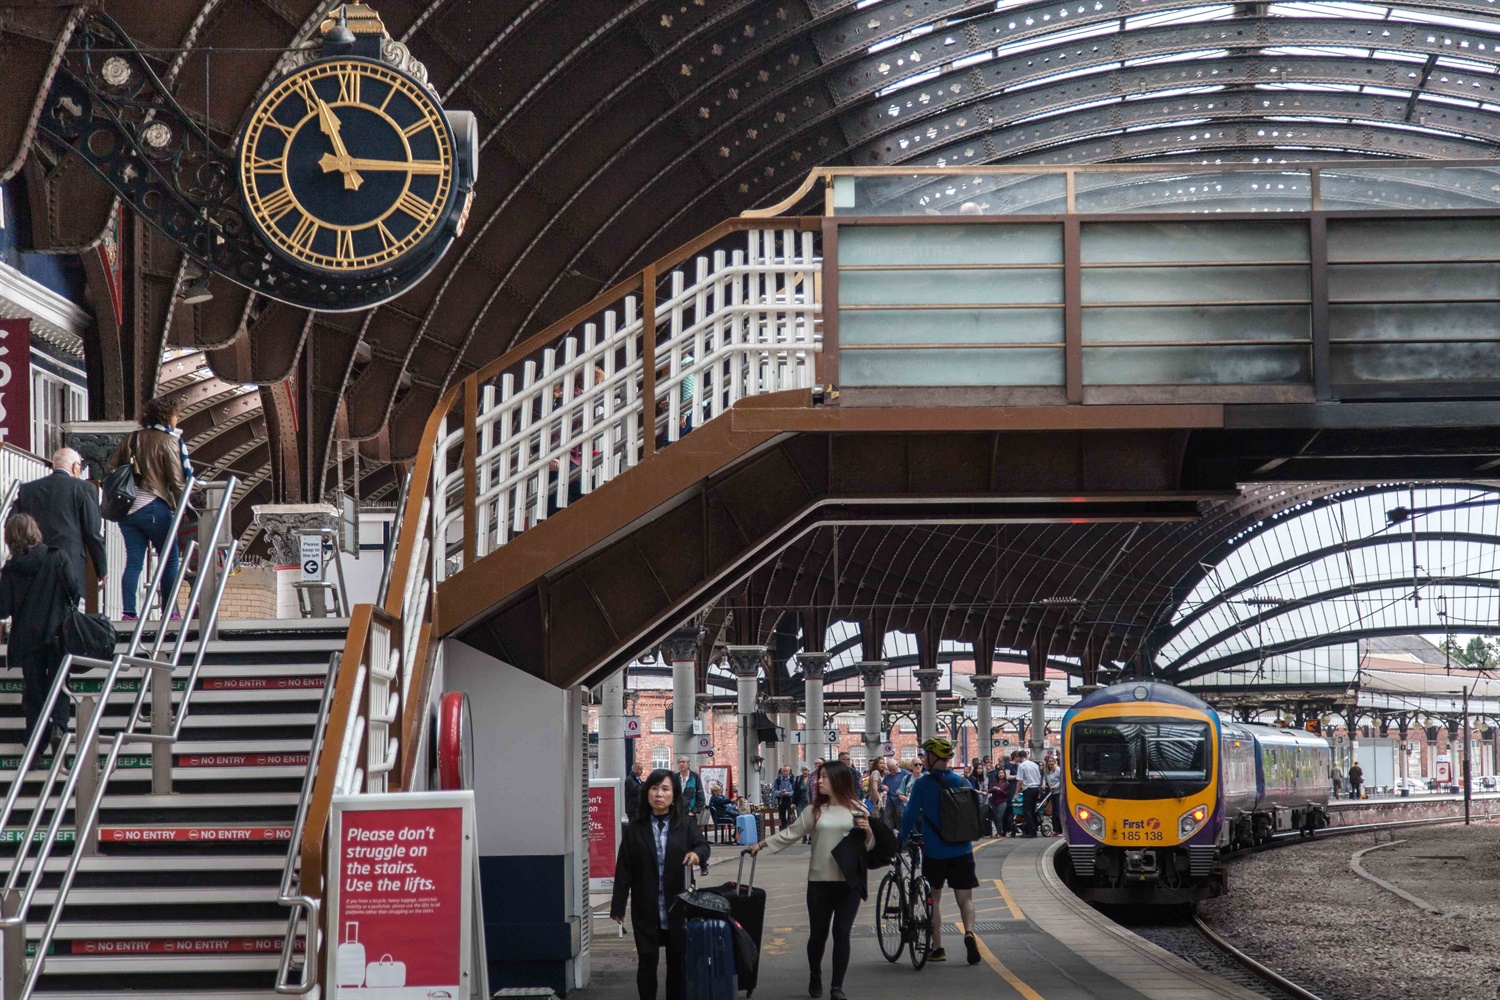 York invites public's views on £100m station revamp